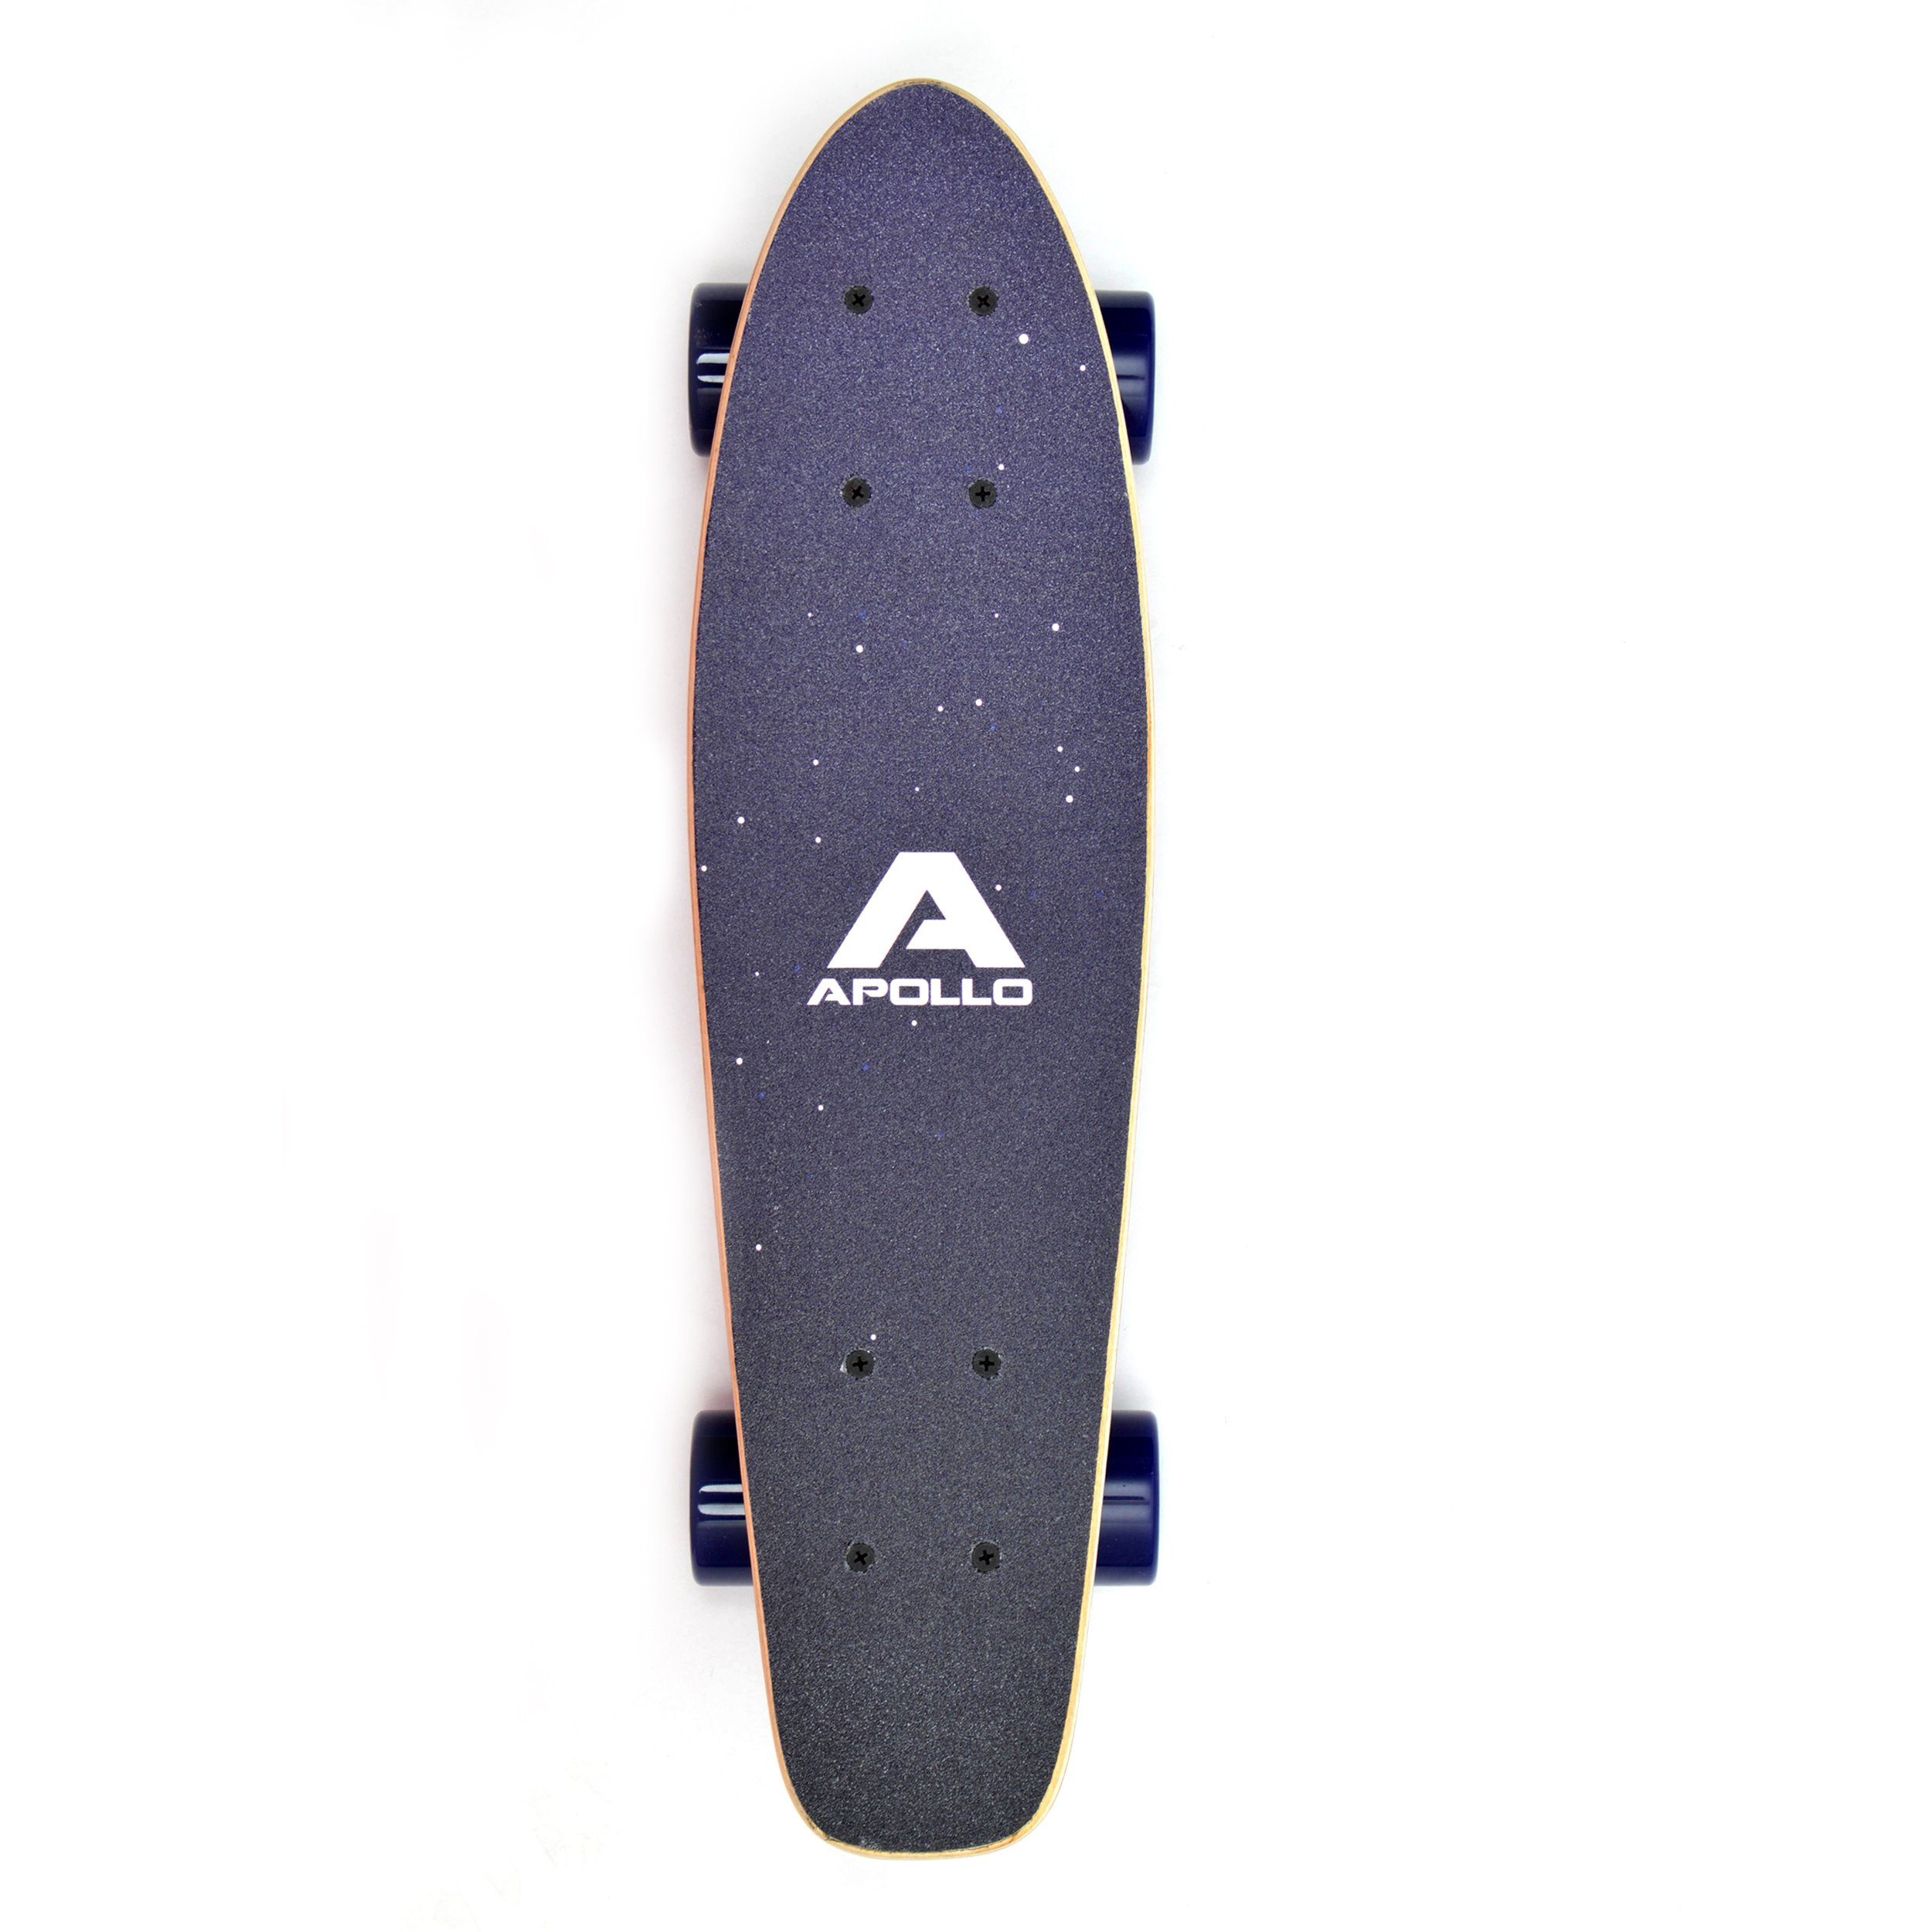 Apollo hochwertiger Blue 22", Classic Verarbeitung Miniskateboard Nebula Fancyboard kompakt mit